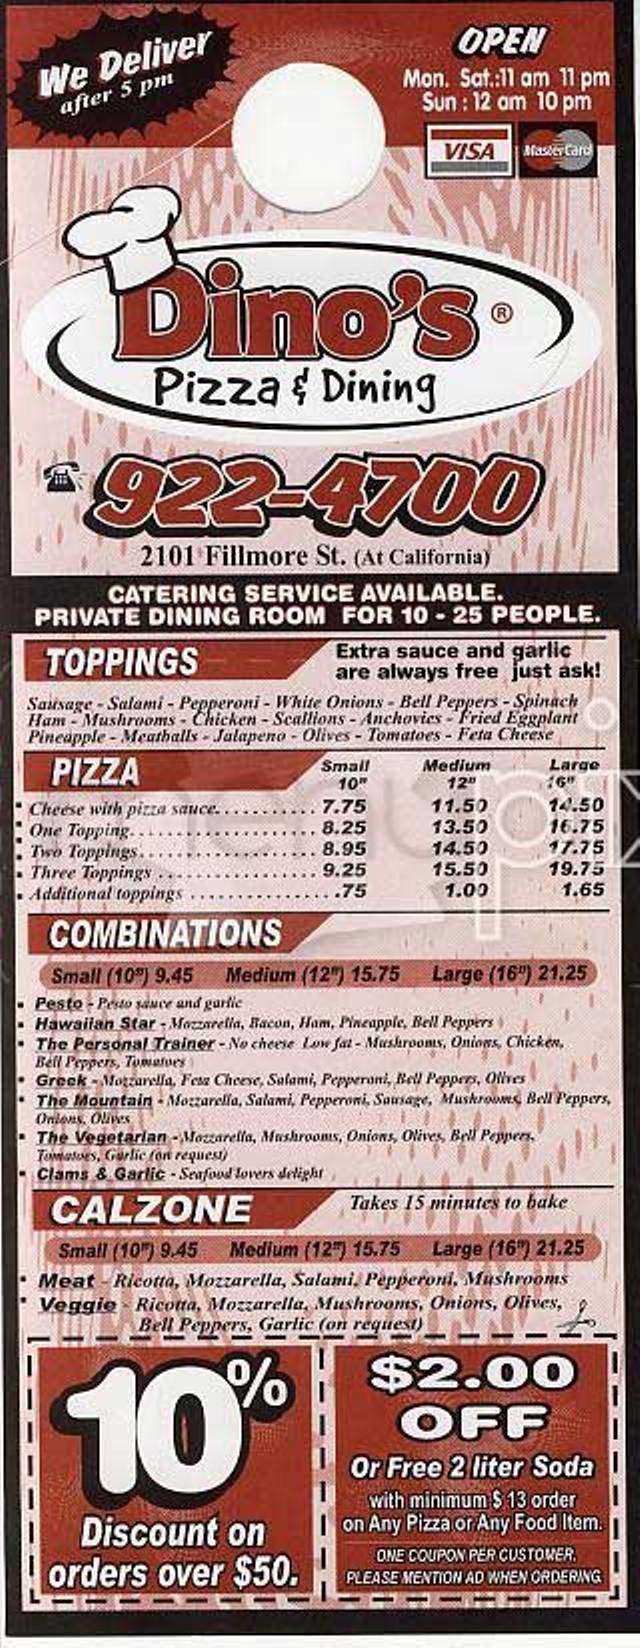 /31828296/Dinos-Pizza-Altoona-PA - Altoona, PA